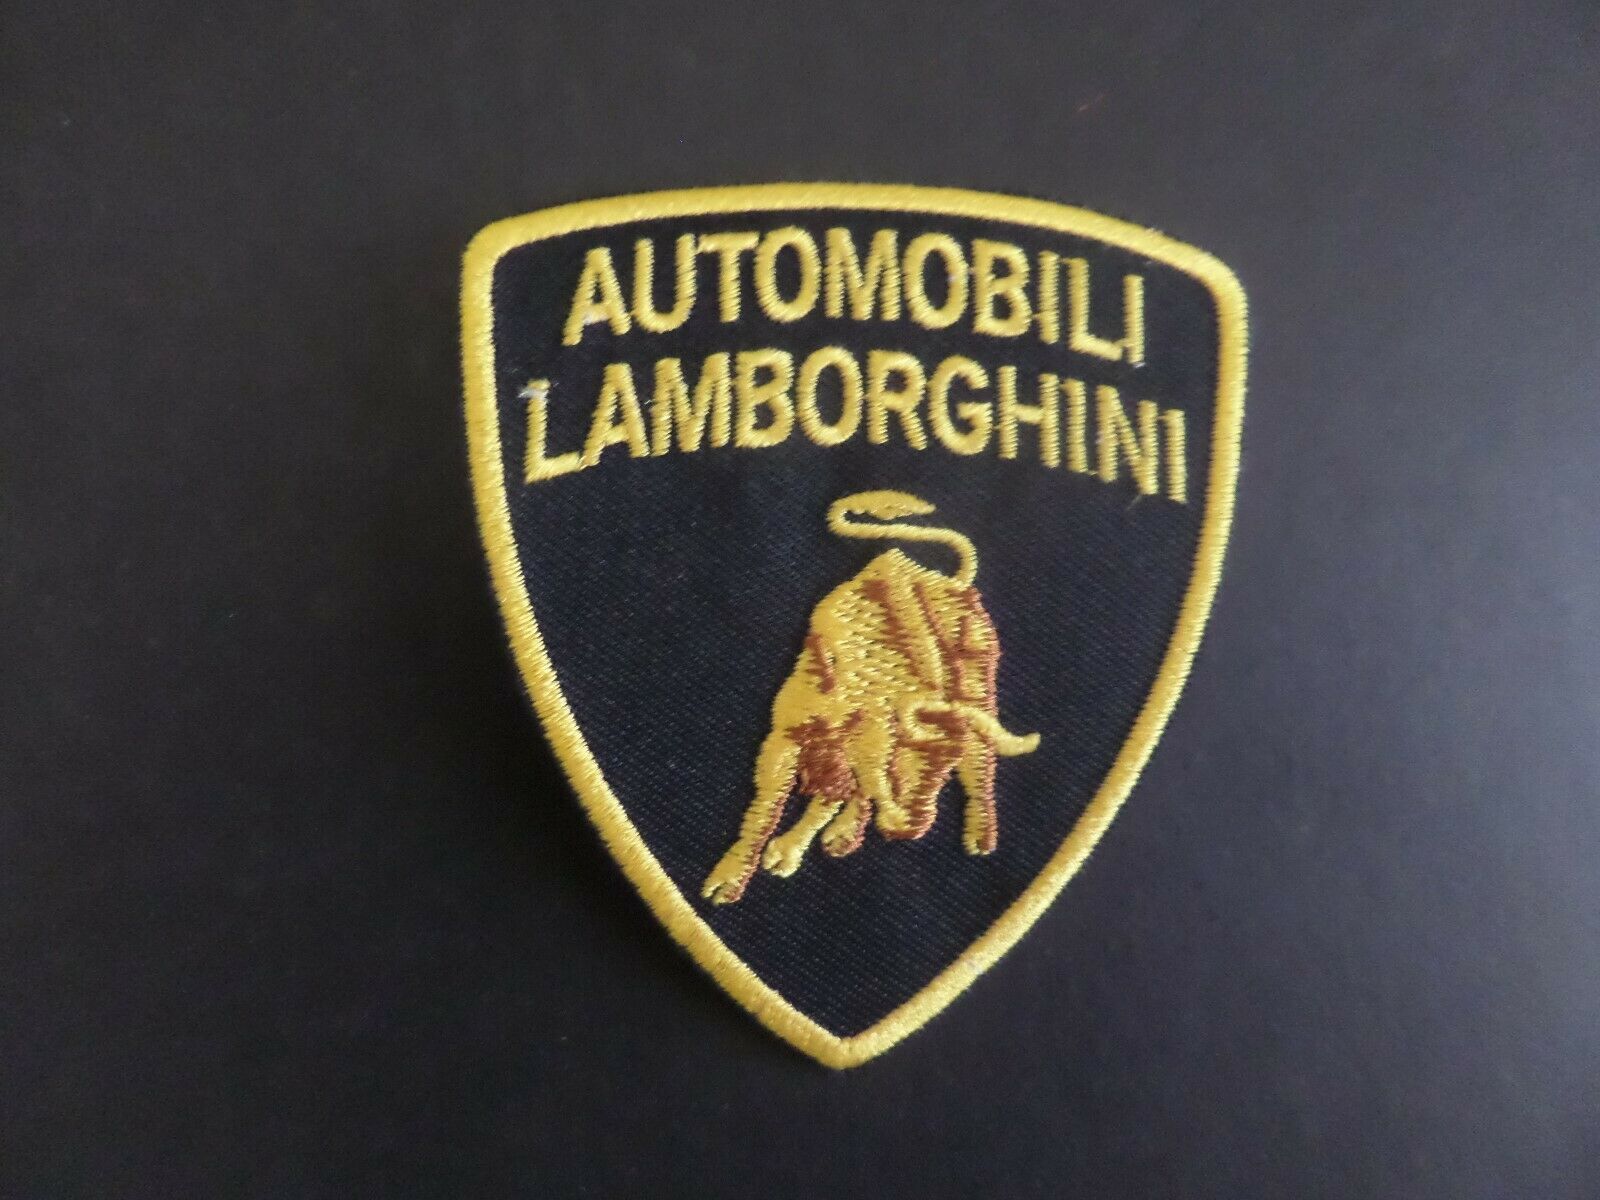 Lamborghini" Auto Yellow & Black  Embroidered 2-3/4 X 3-1/8 Iron On Patch